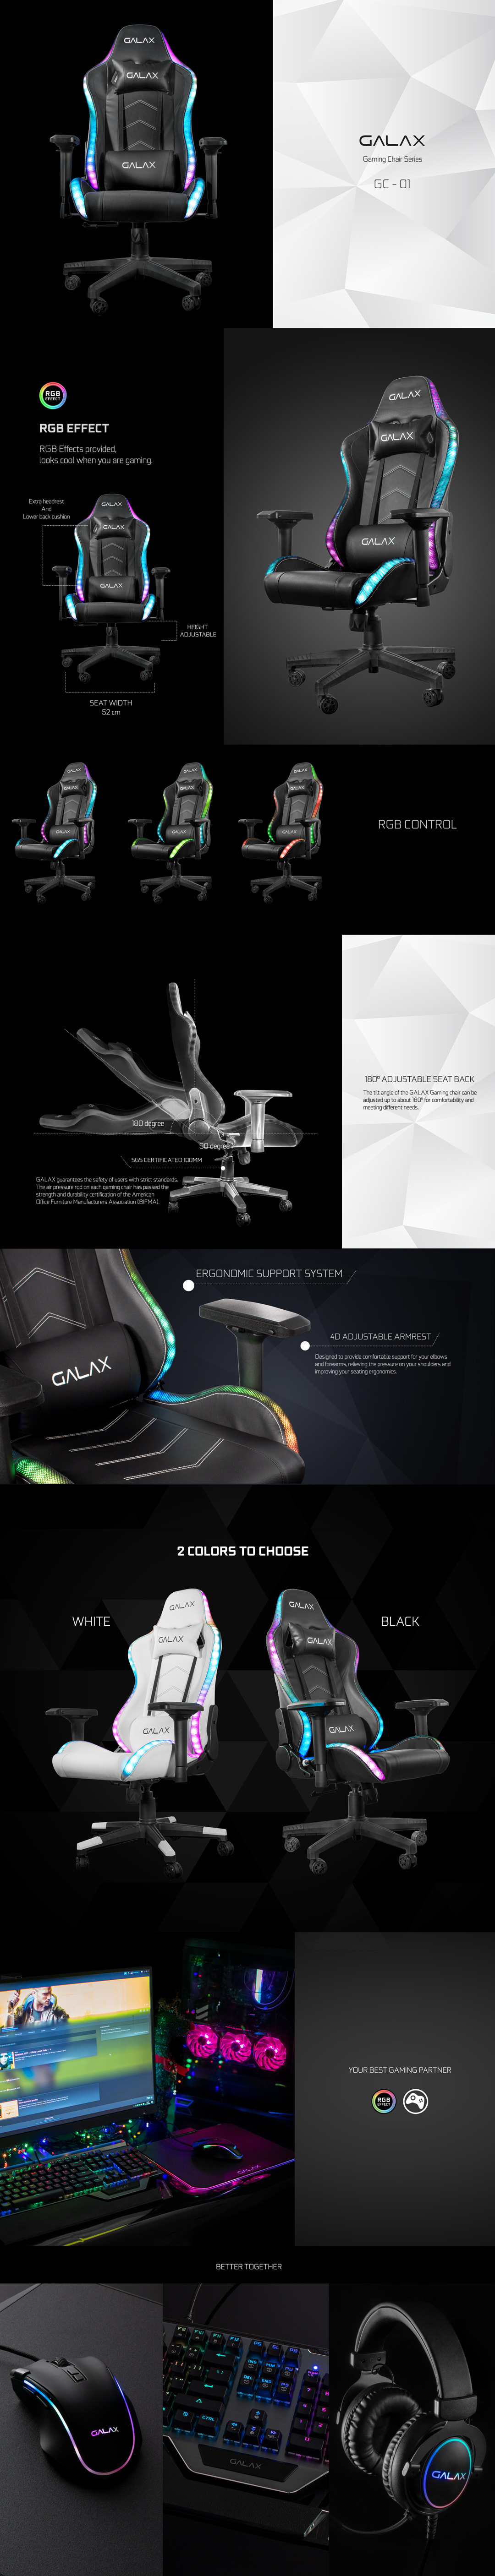 Galax GGC-001 : un fauteuil Gaming avec plein, mais plein de RGB